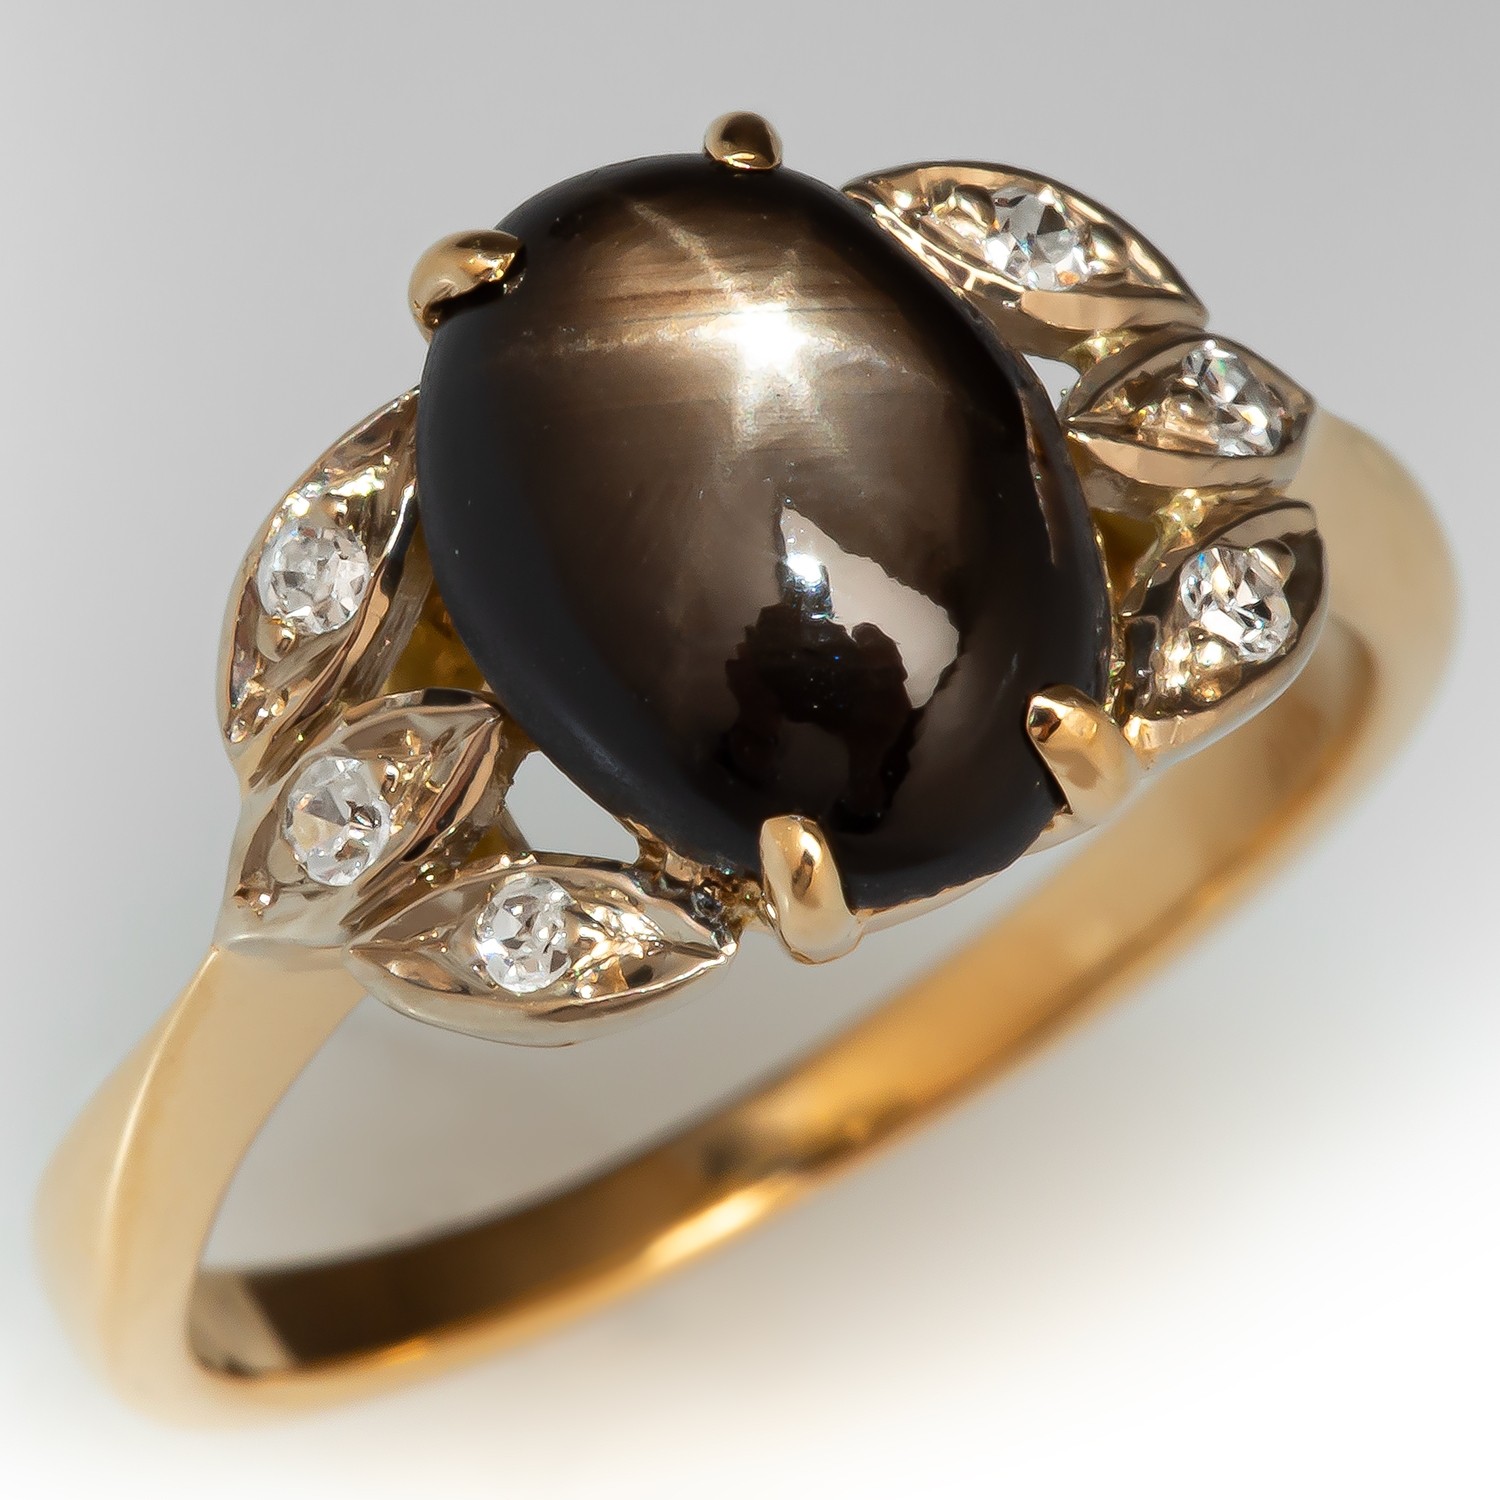 Natural Black Star Sapphire 14k Gold Ring, size 7.5: sbkj146